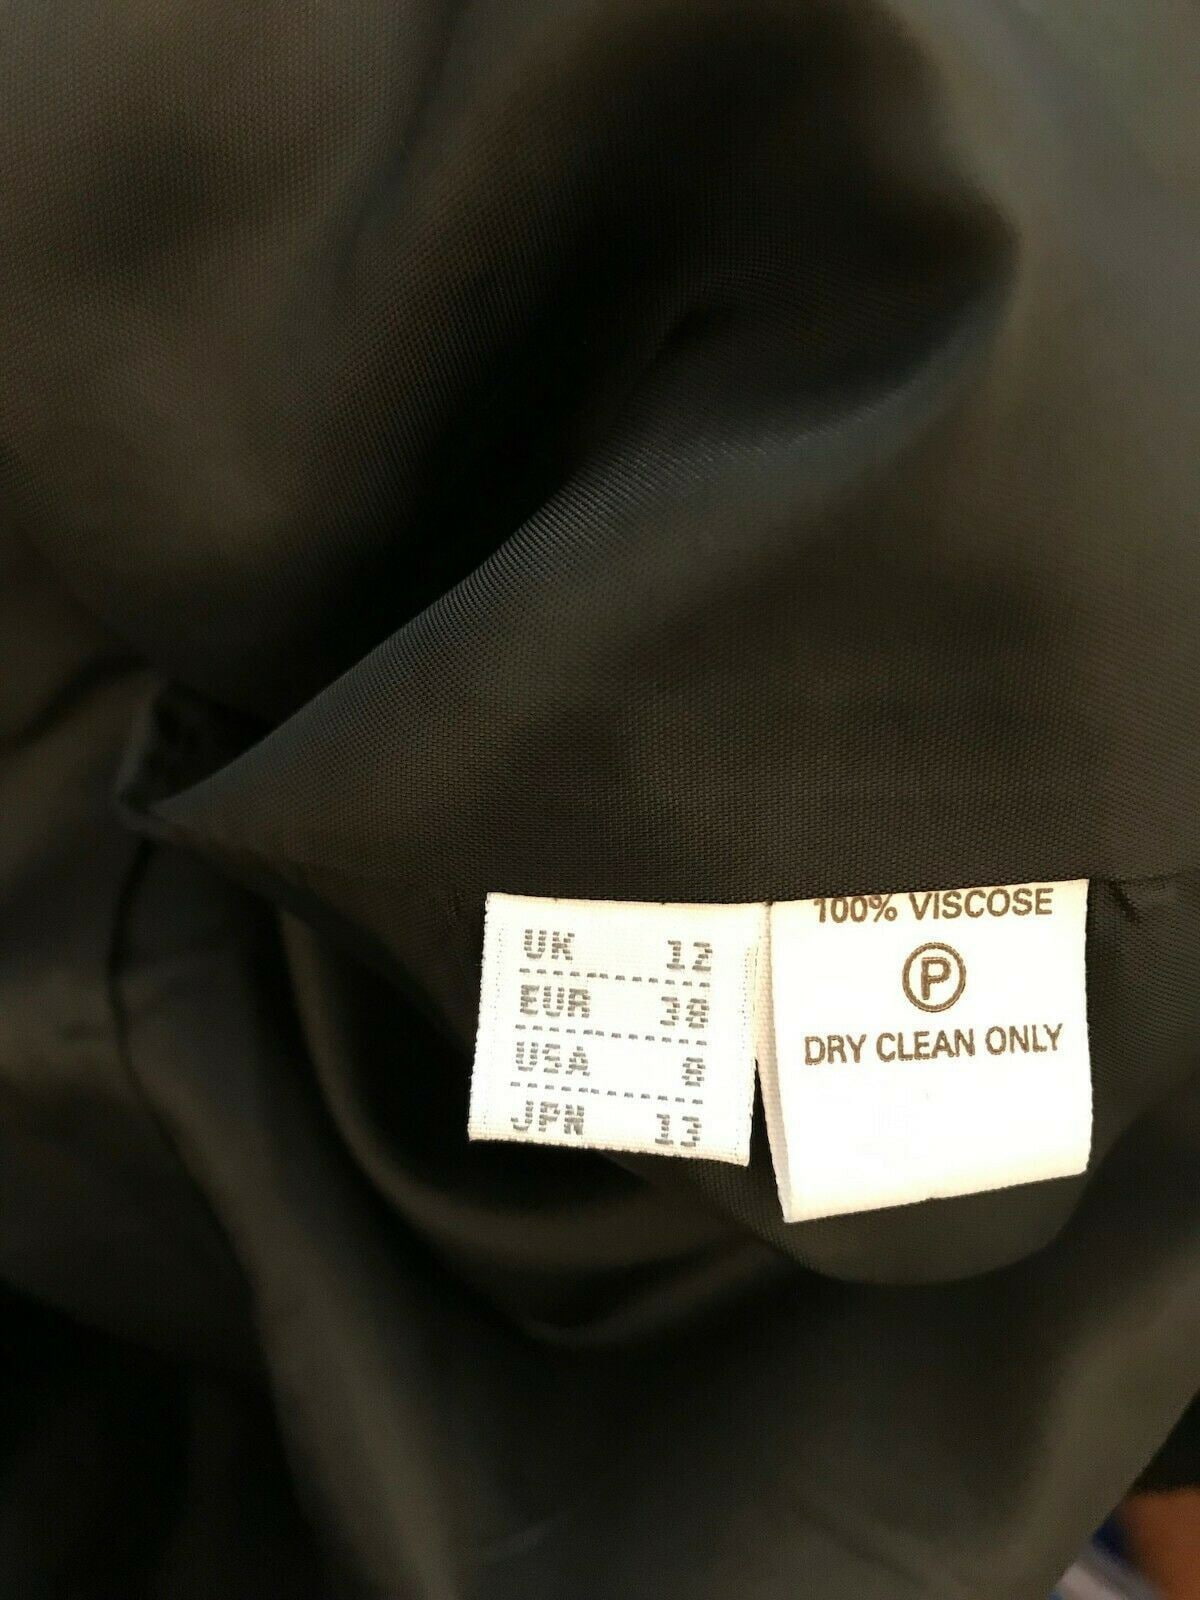 Nicole Farhi Black Tailored Blazer Jacket UK 12 US 8 EU 40 Timeless Fashions